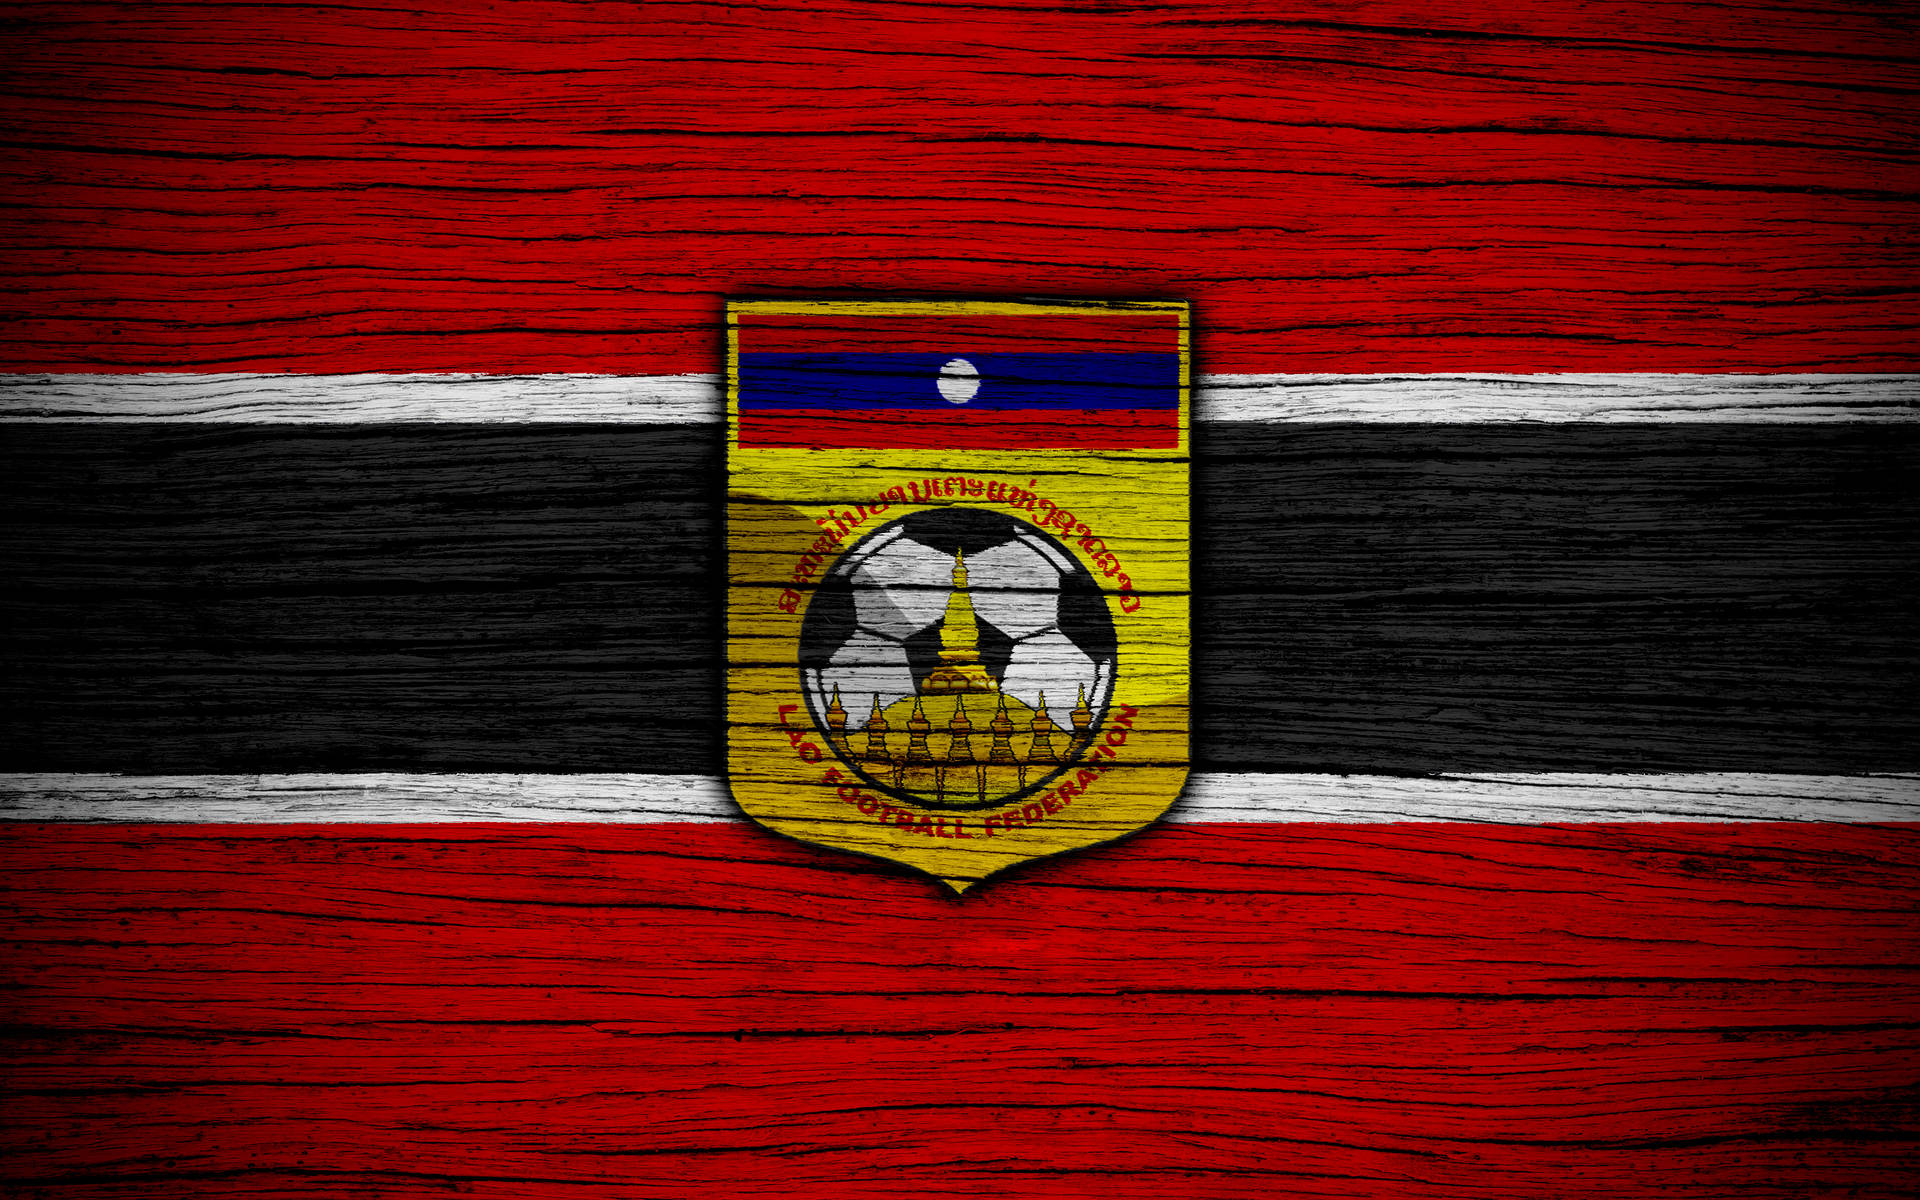 Laos Football Team Logo Background